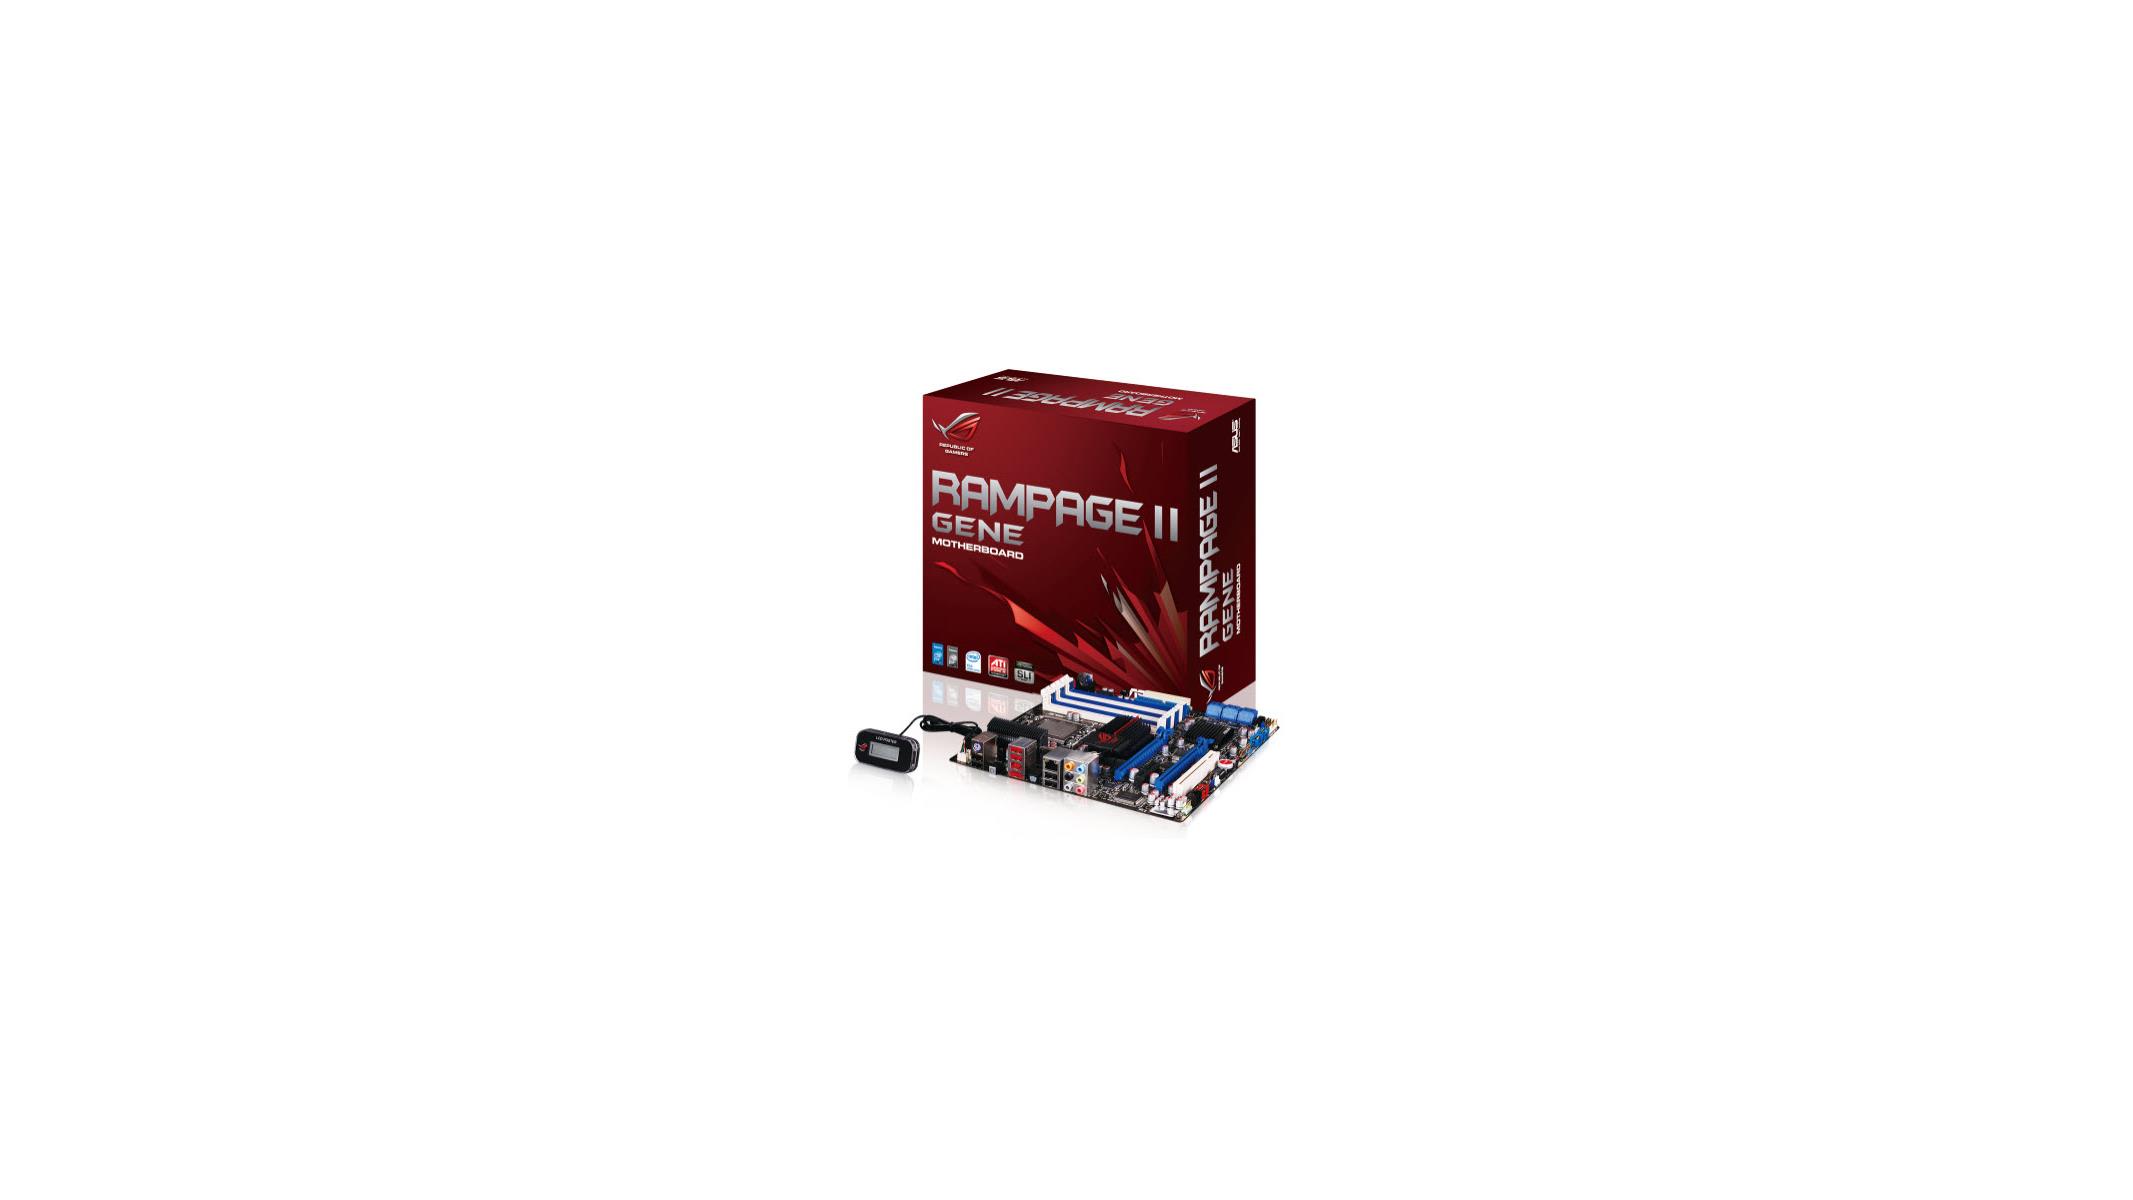 ASUS Rampage II Extreme LGA 1366 Intel X58 ATX Intel Motherboard マザーボード 